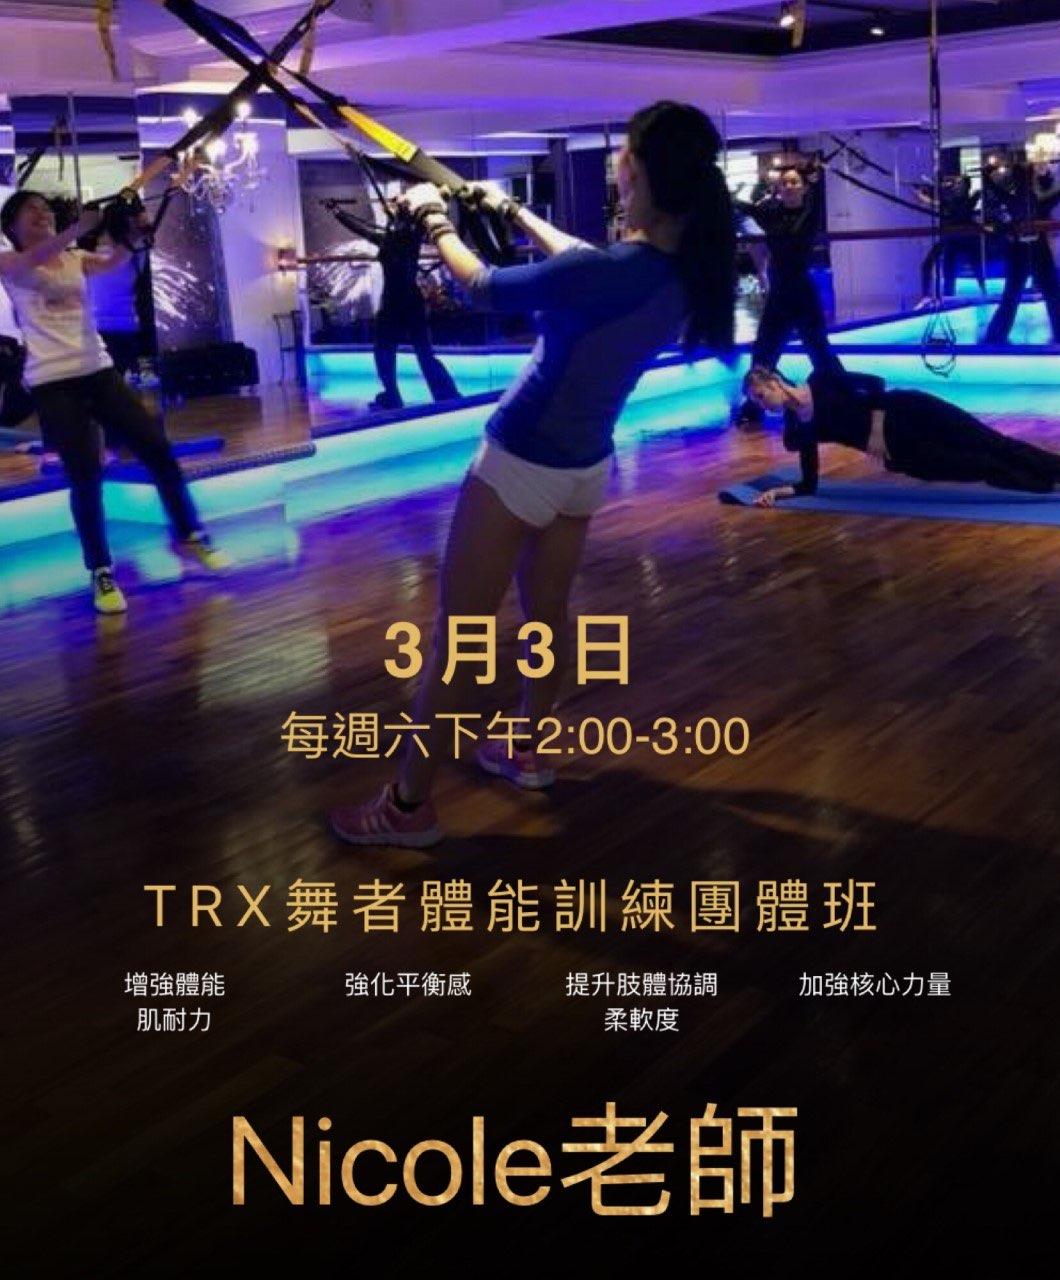 TRX團體班 - Nicole